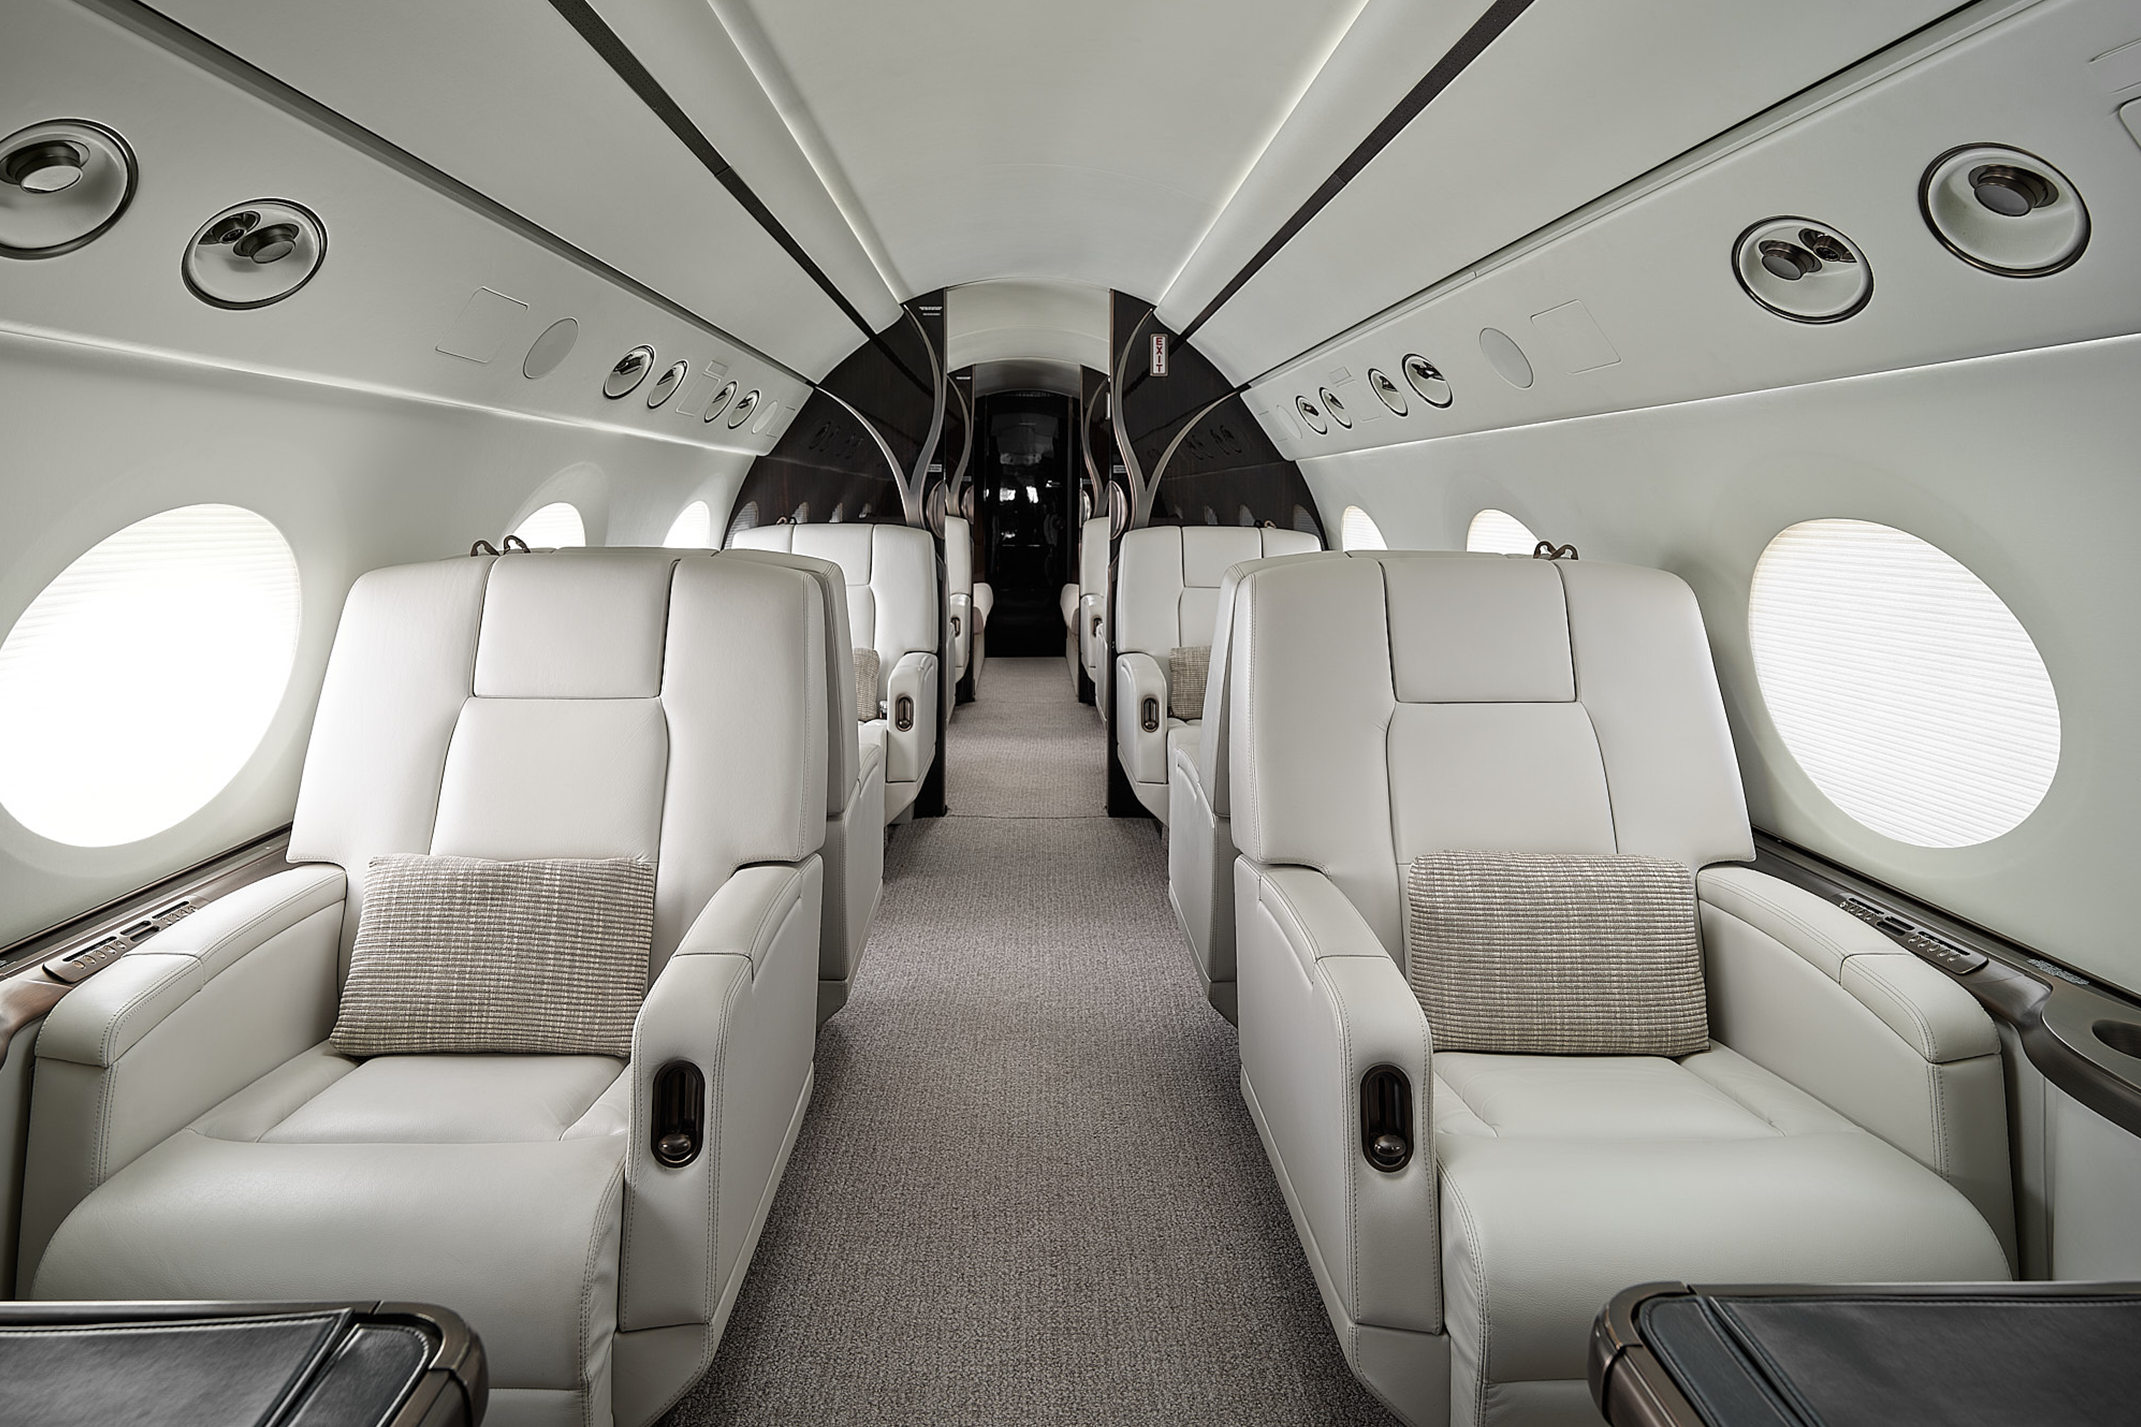 Interior cabin view of Gulfstream G550 N550 Center Seating